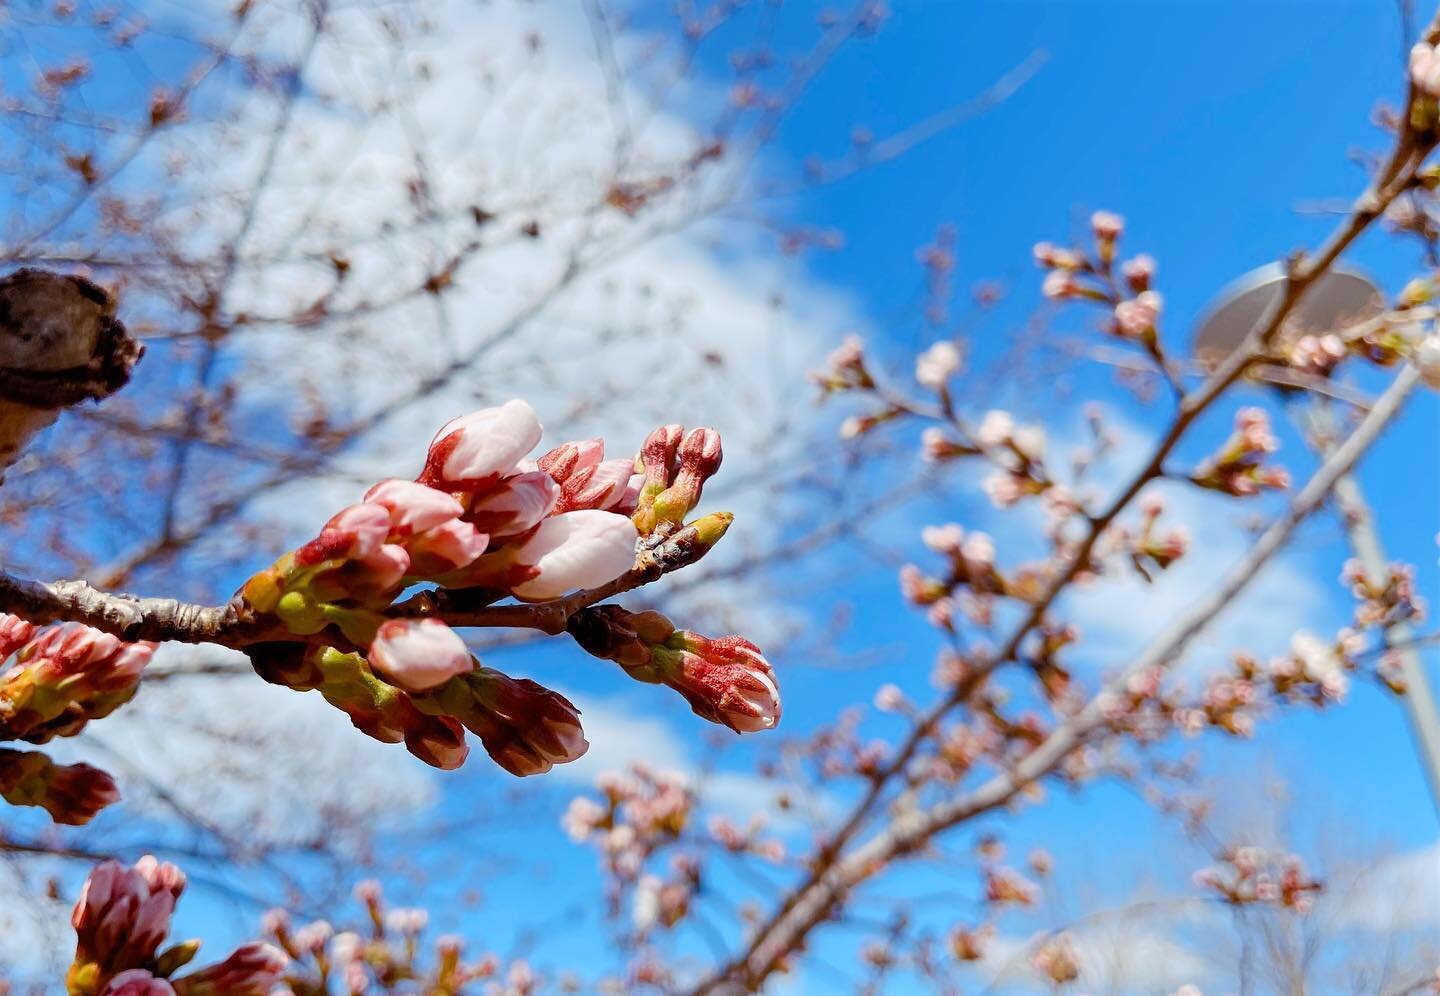 The First Taste of Spring 🌸
#Sakura #Spring #桜 #春 #Bloom